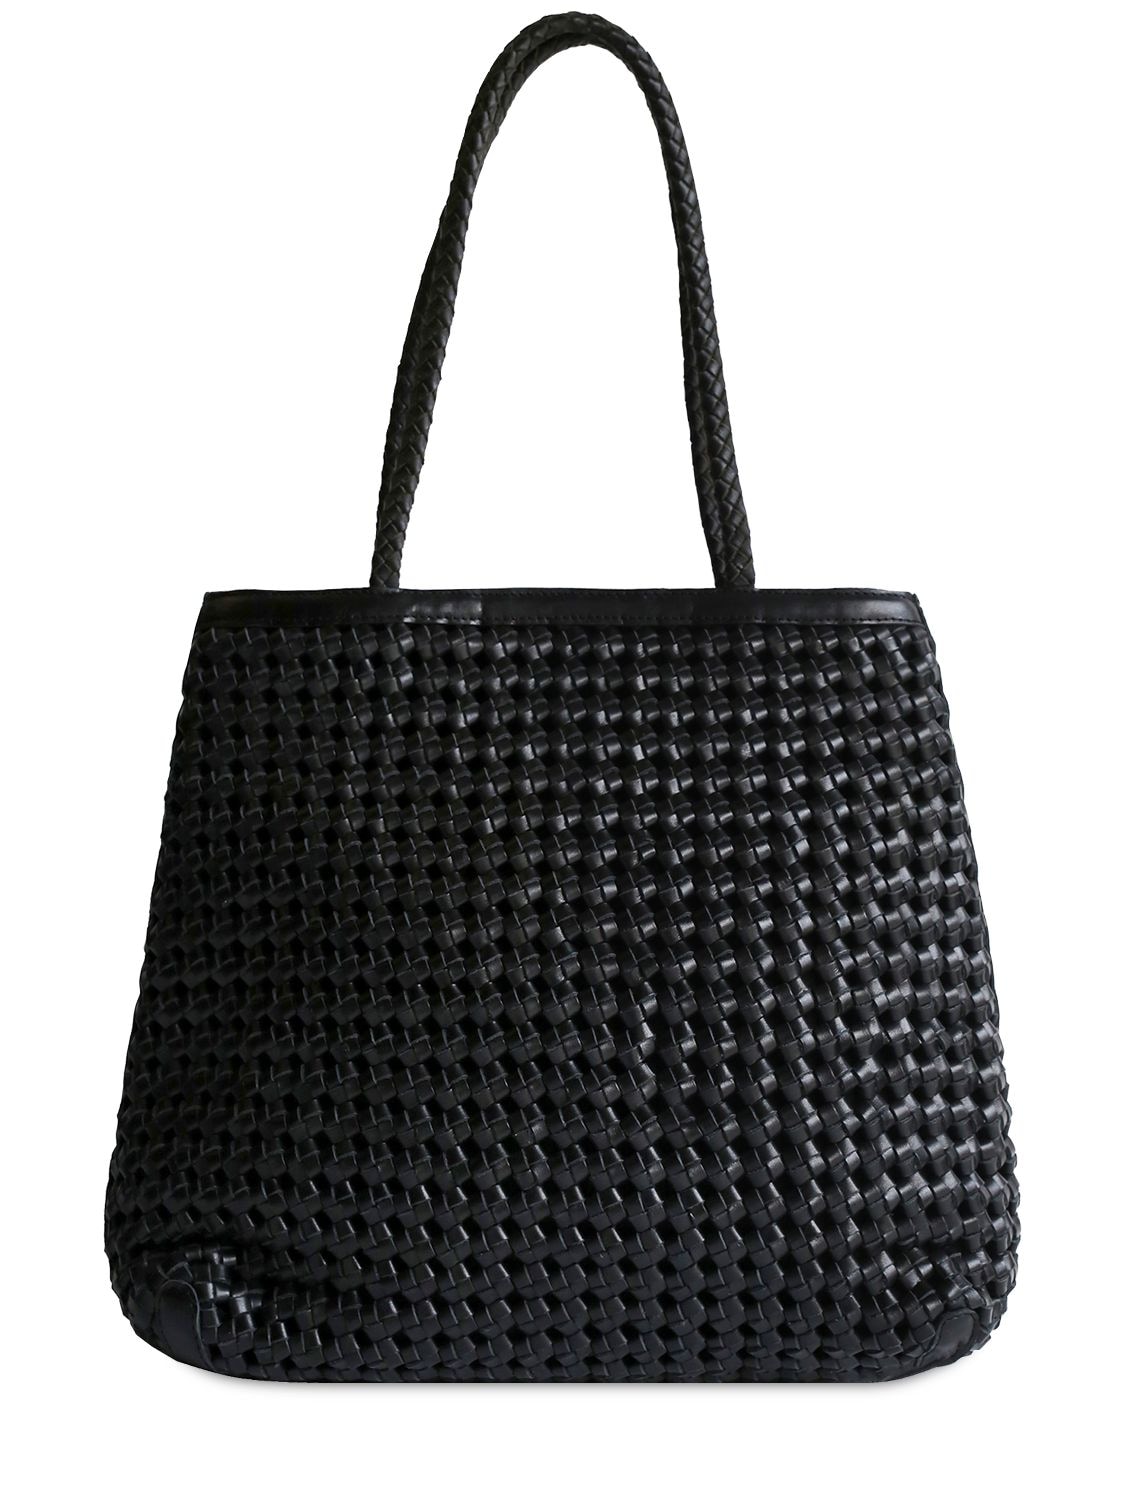 Image of Olivia Leather Tote Bag